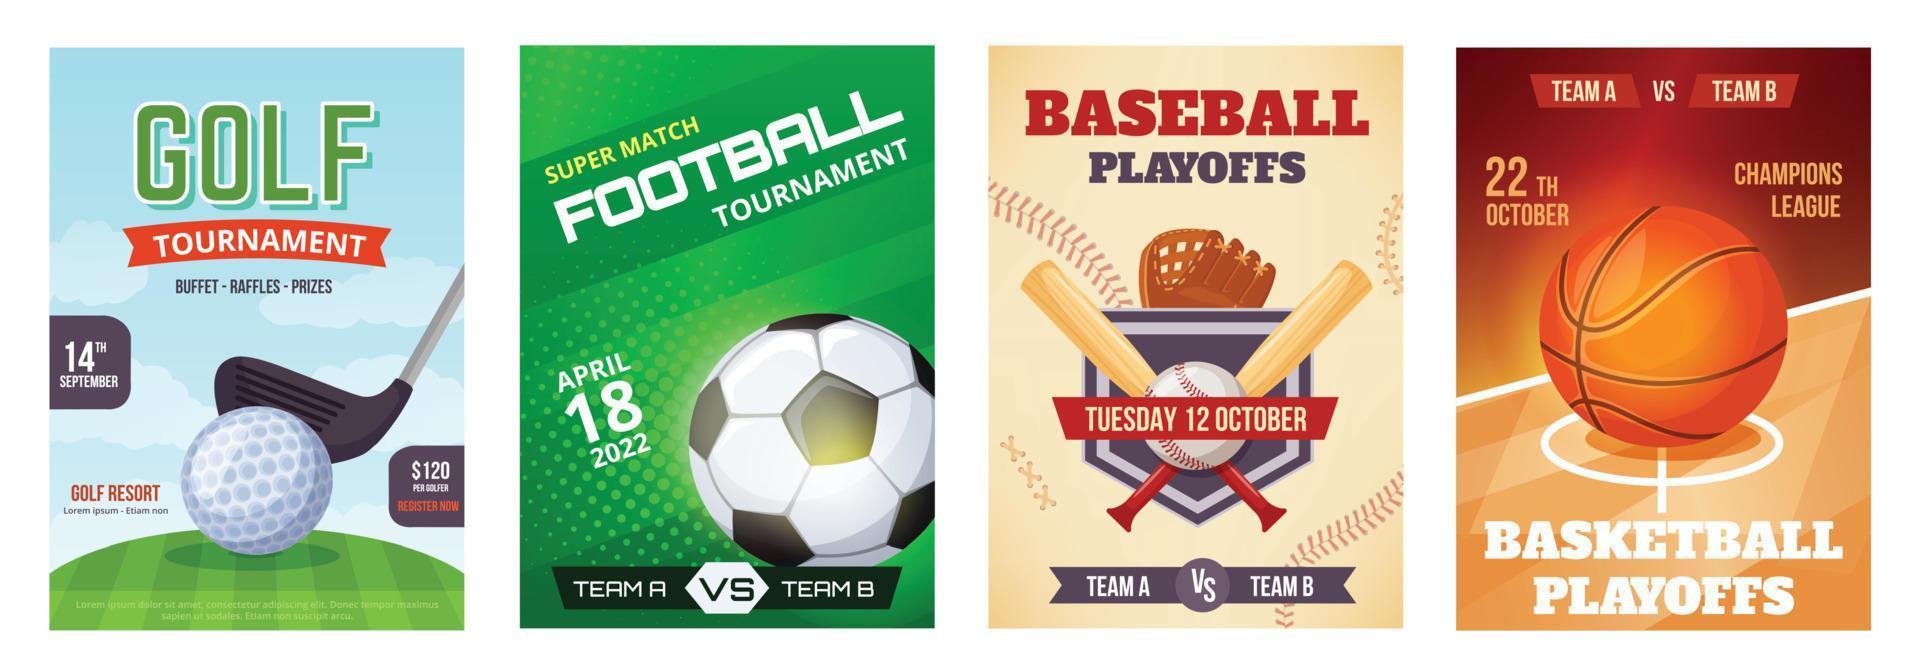 Sports game tournament poster, basketball playoff announcement flyer. Golf, football, baseball sport advertising posters vector template set